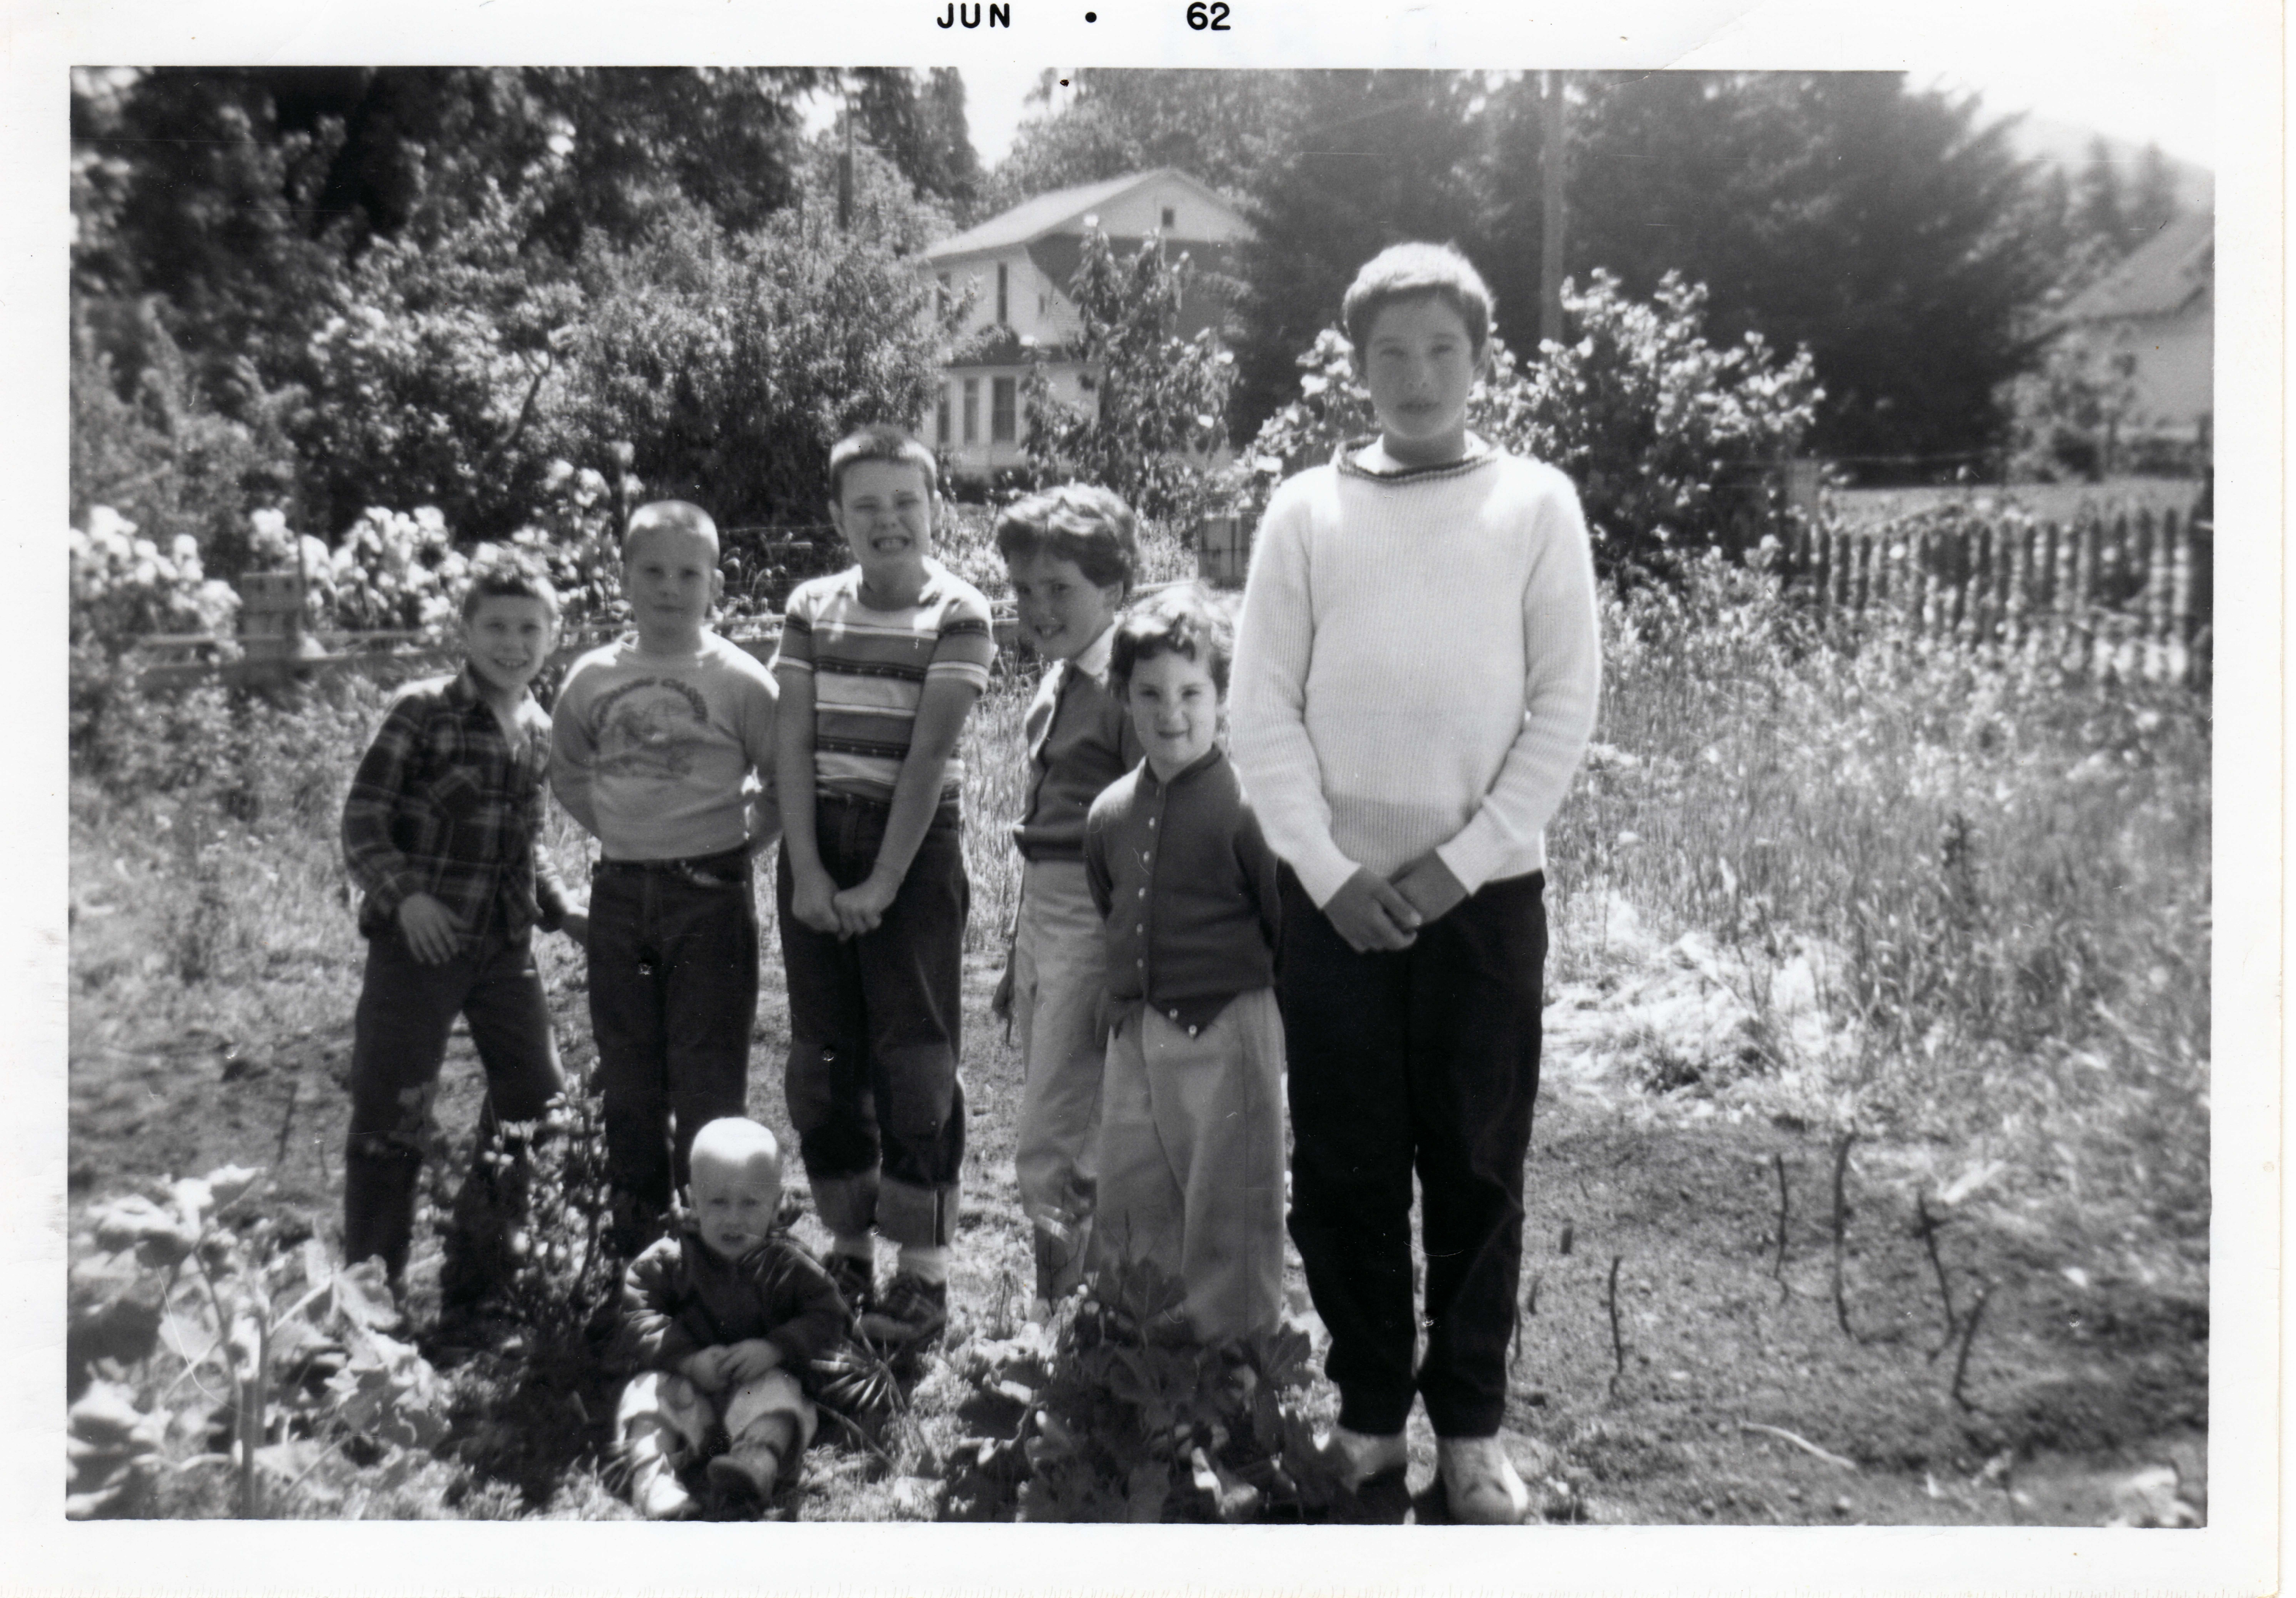 rb kids in hood river june 02 1962 001